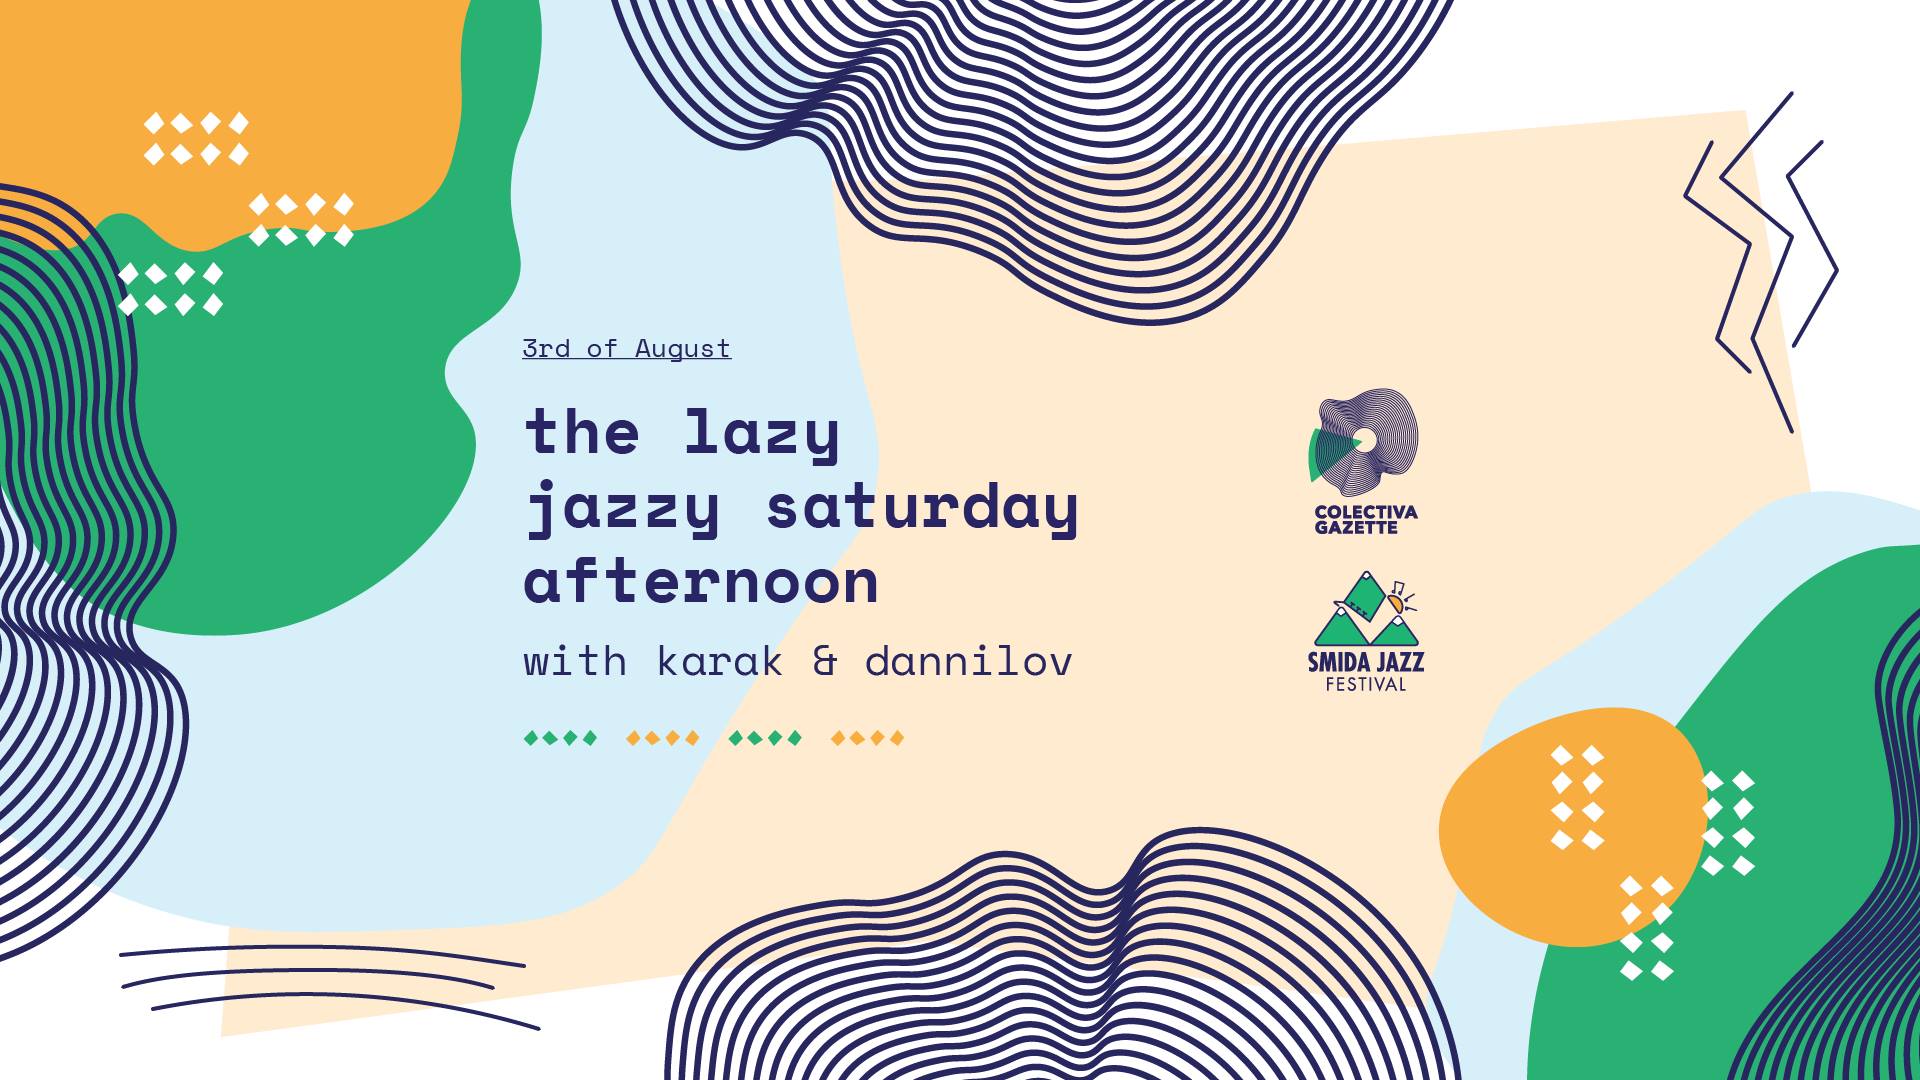 The Lazy Jazzy Saturday Afternoon with Karak & dannilov